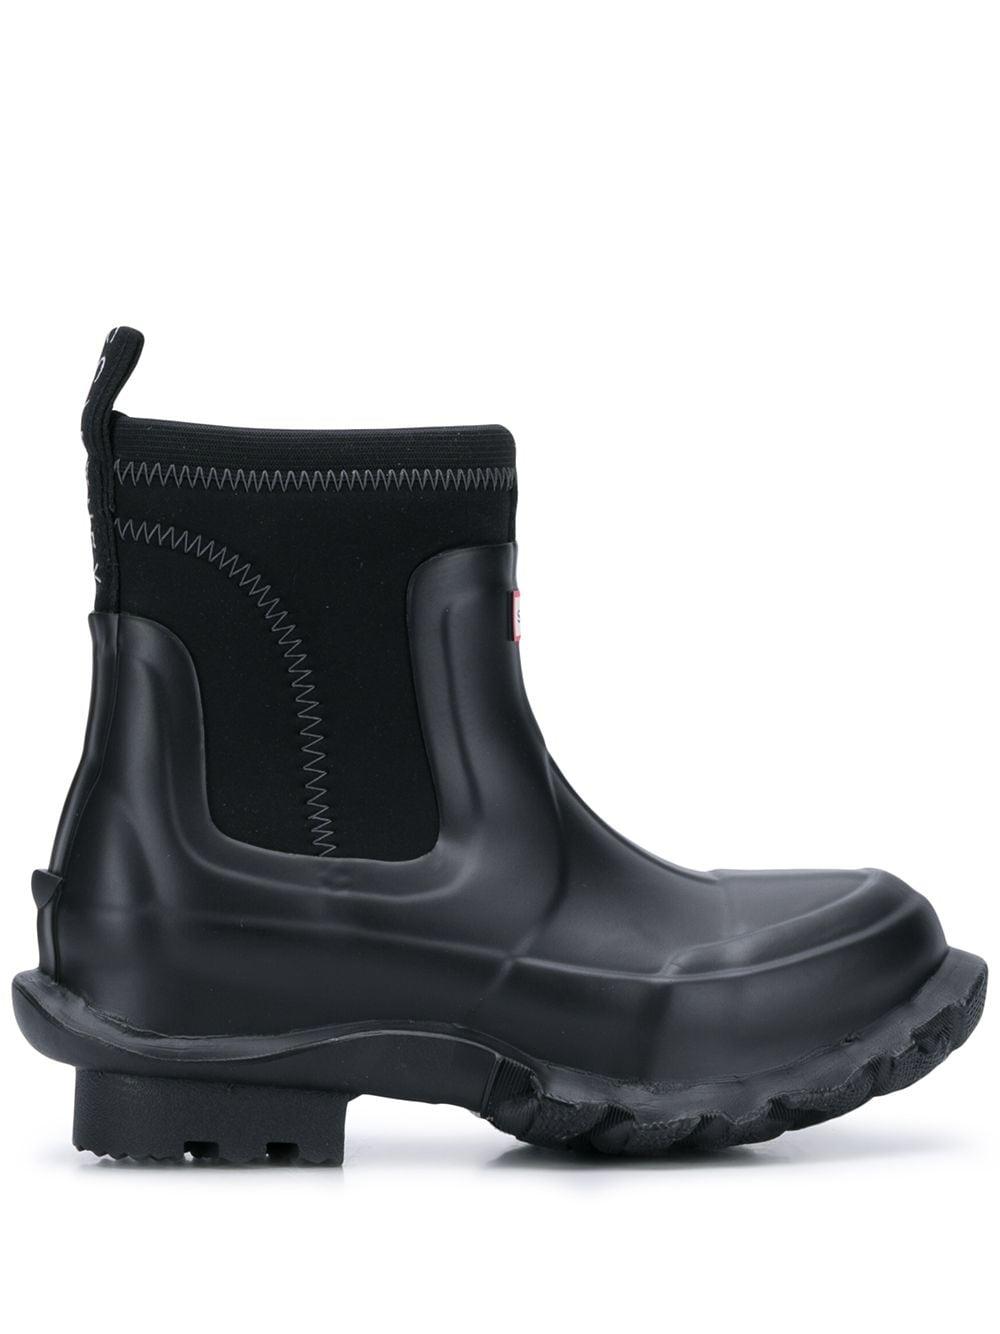 Stella McCartney Rubber X Hunter Rain Boots in Black - Save 67% | Lyst